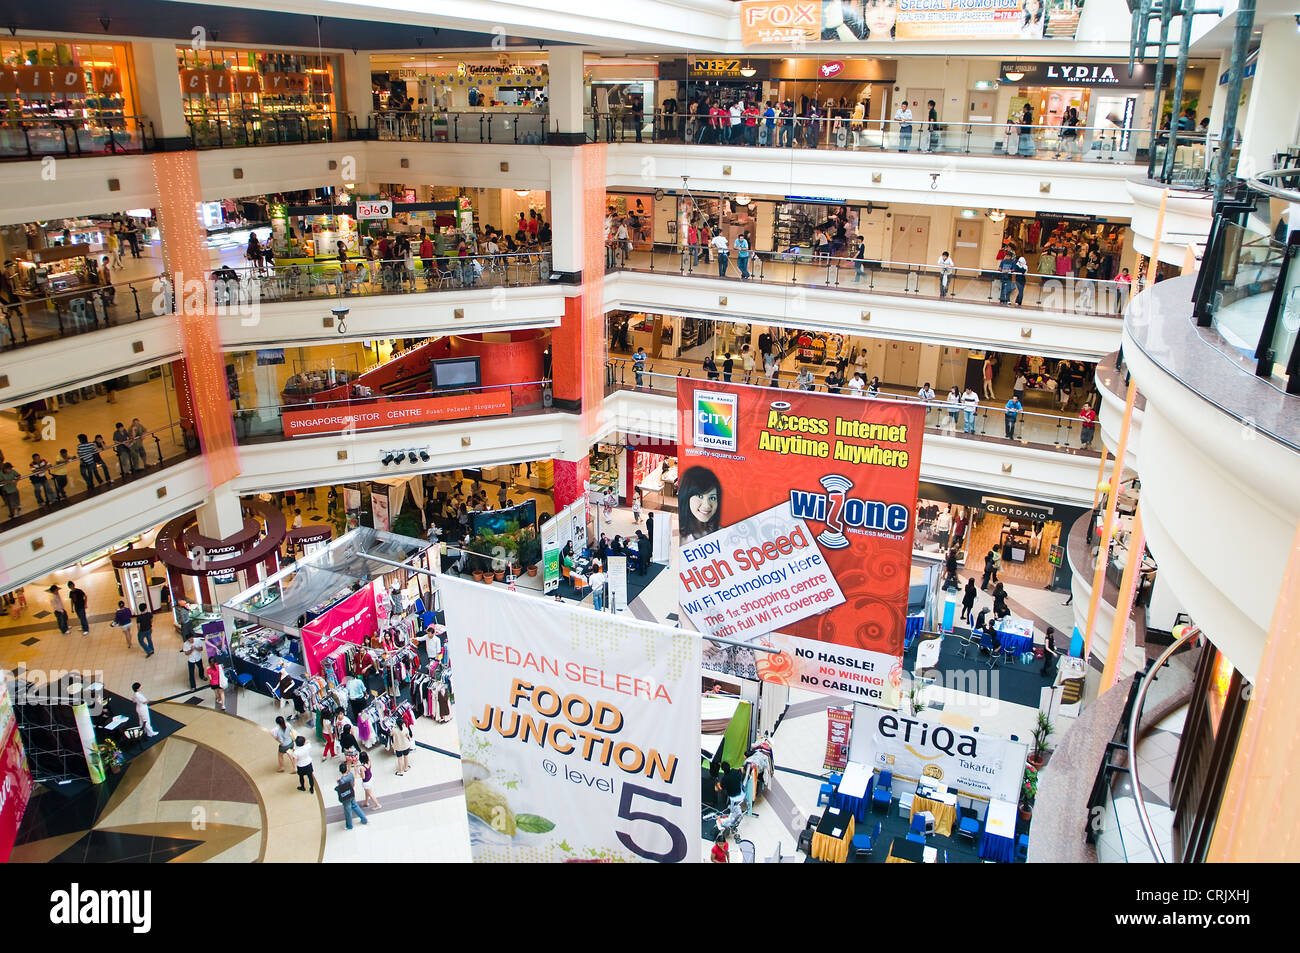 City Square Shopping Mall Johor Bahru Malaysia Stock Photo Alamy